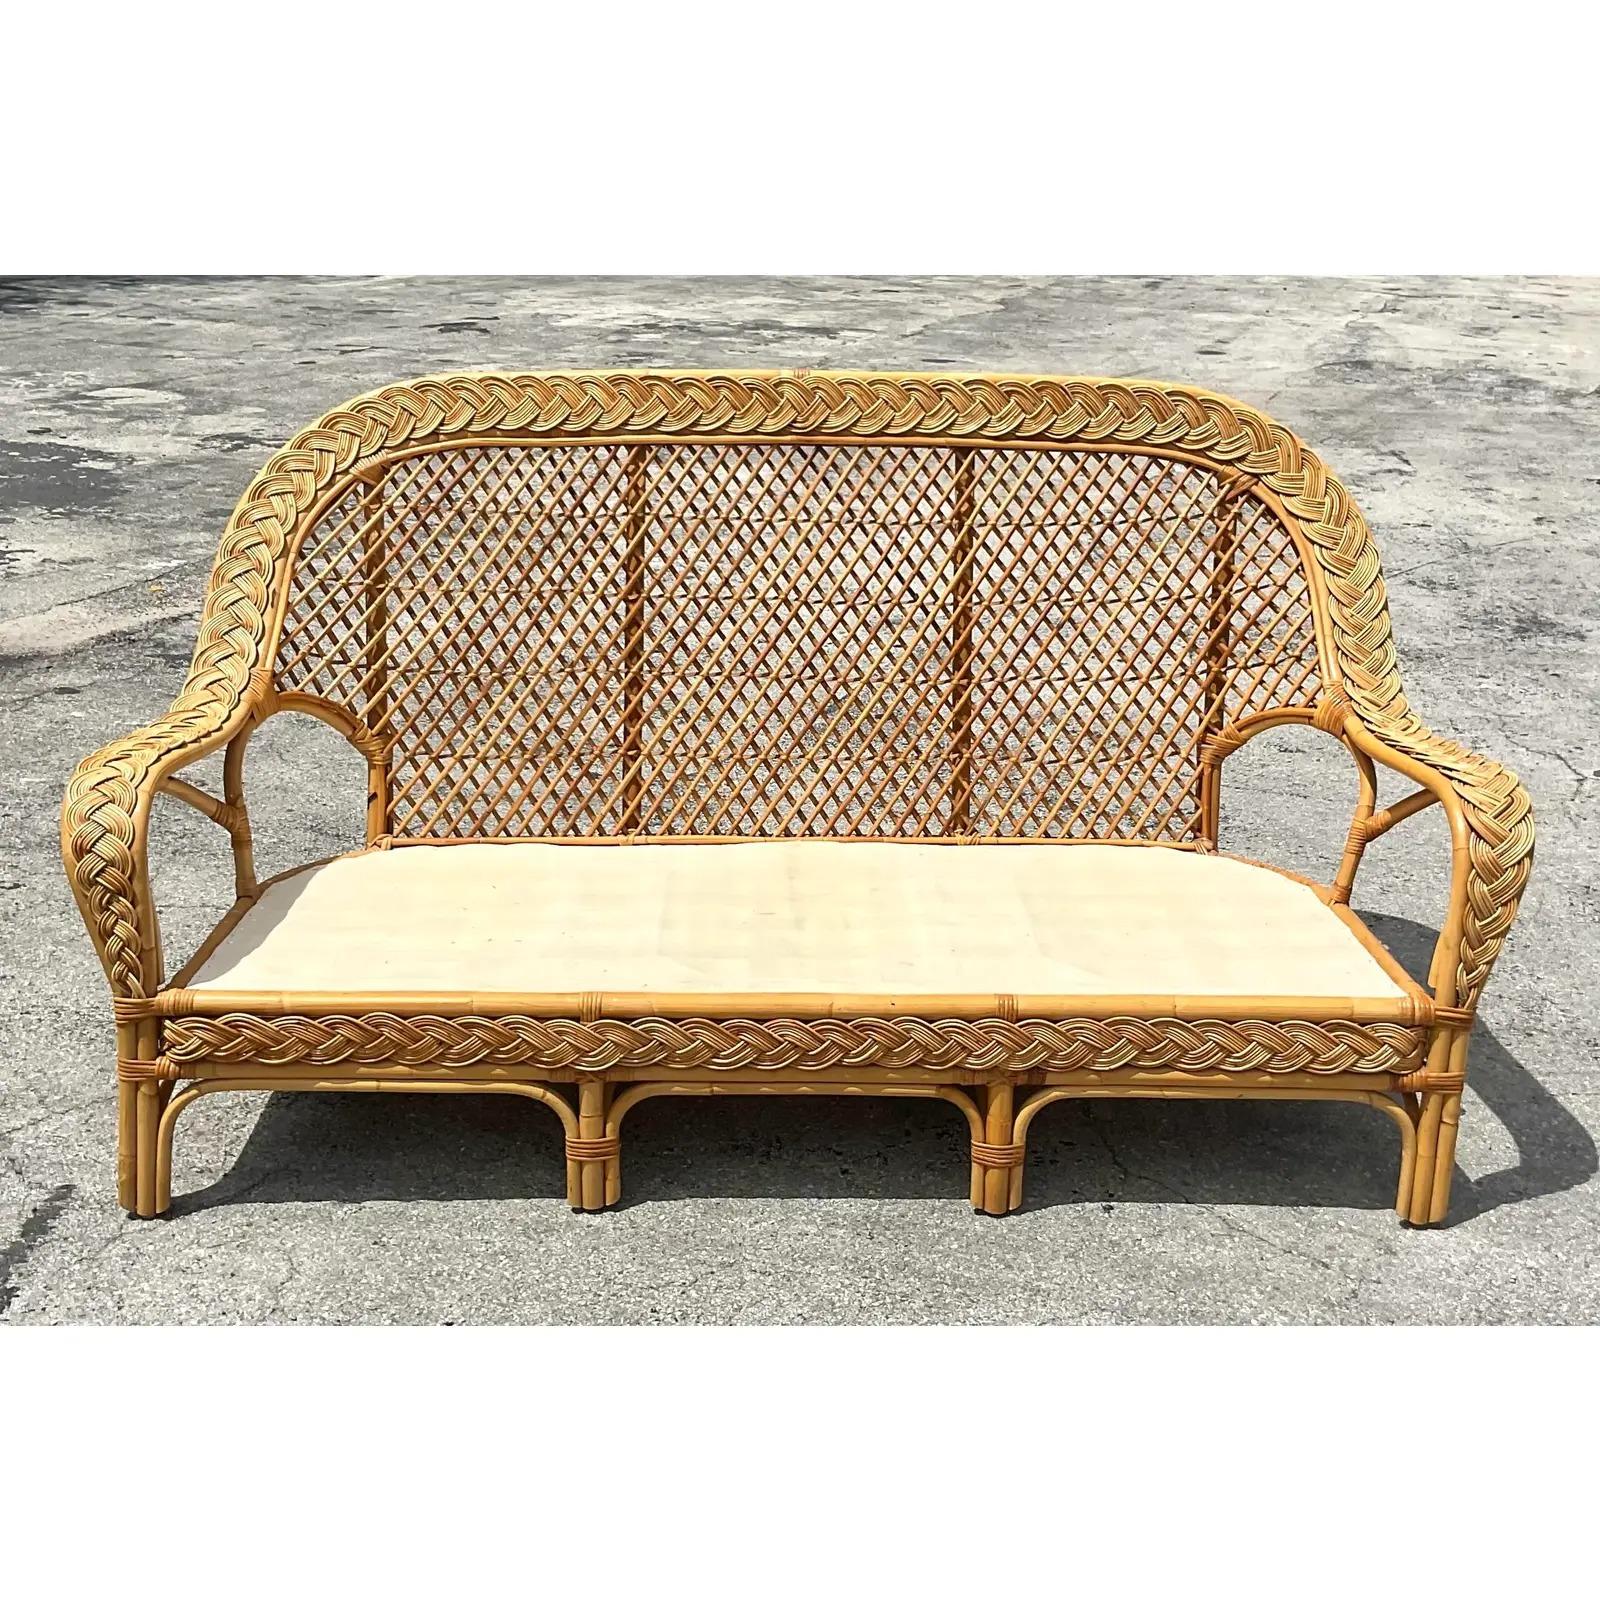 vintage rattan sofa -china -b2b -forum -blog -wikipedia -.cn -.gov -alibaba